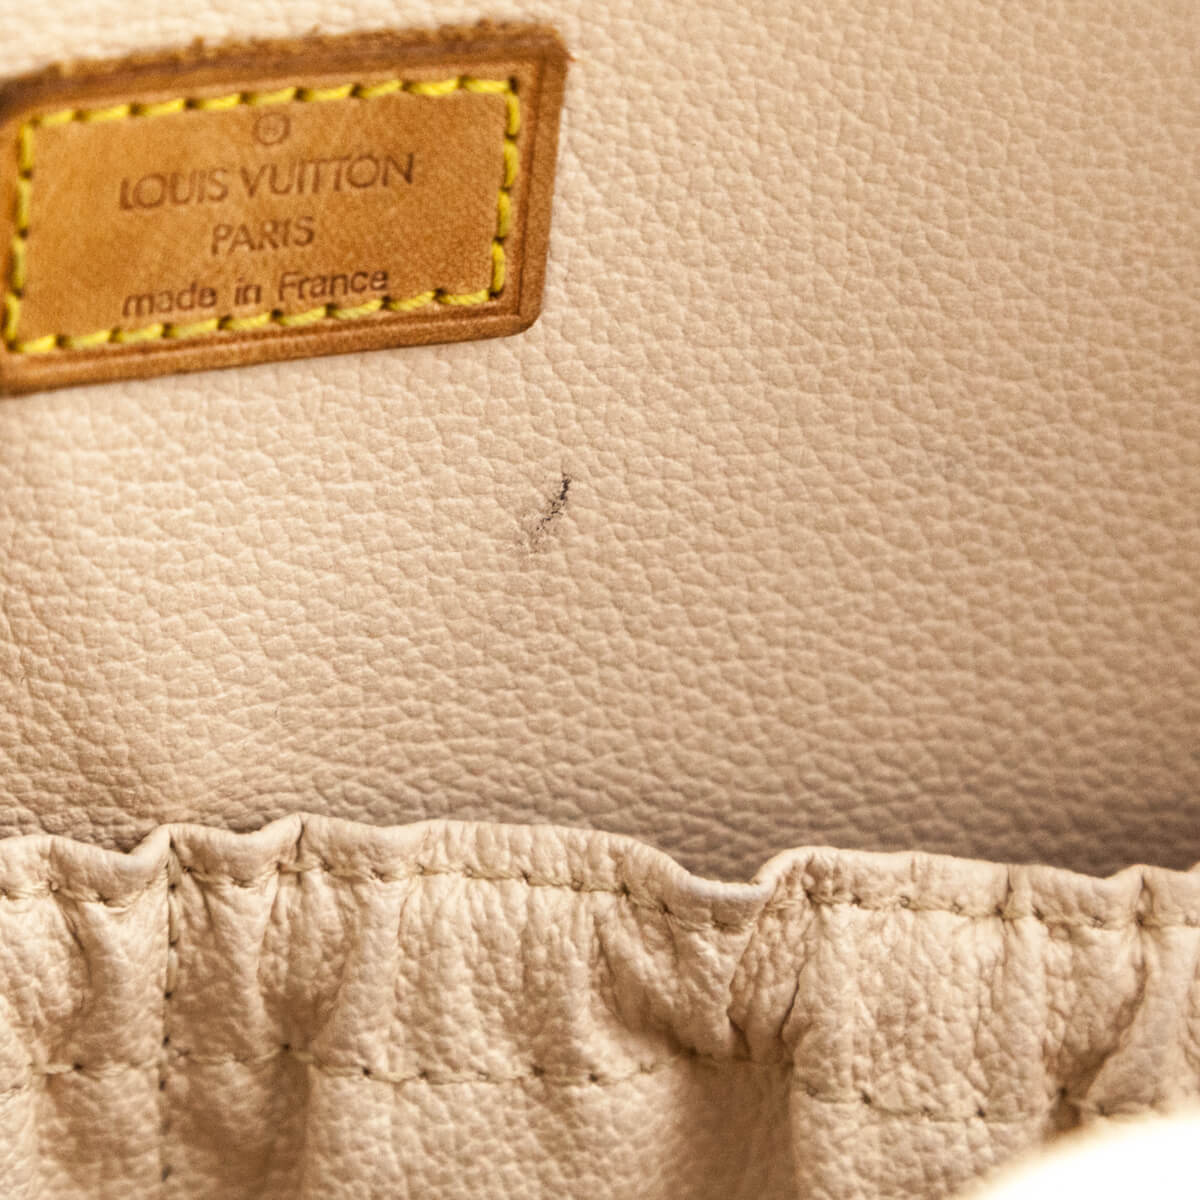 Louis Vuitton Monogram Spontini Bag - Preloved Louis Vuitton Handbags